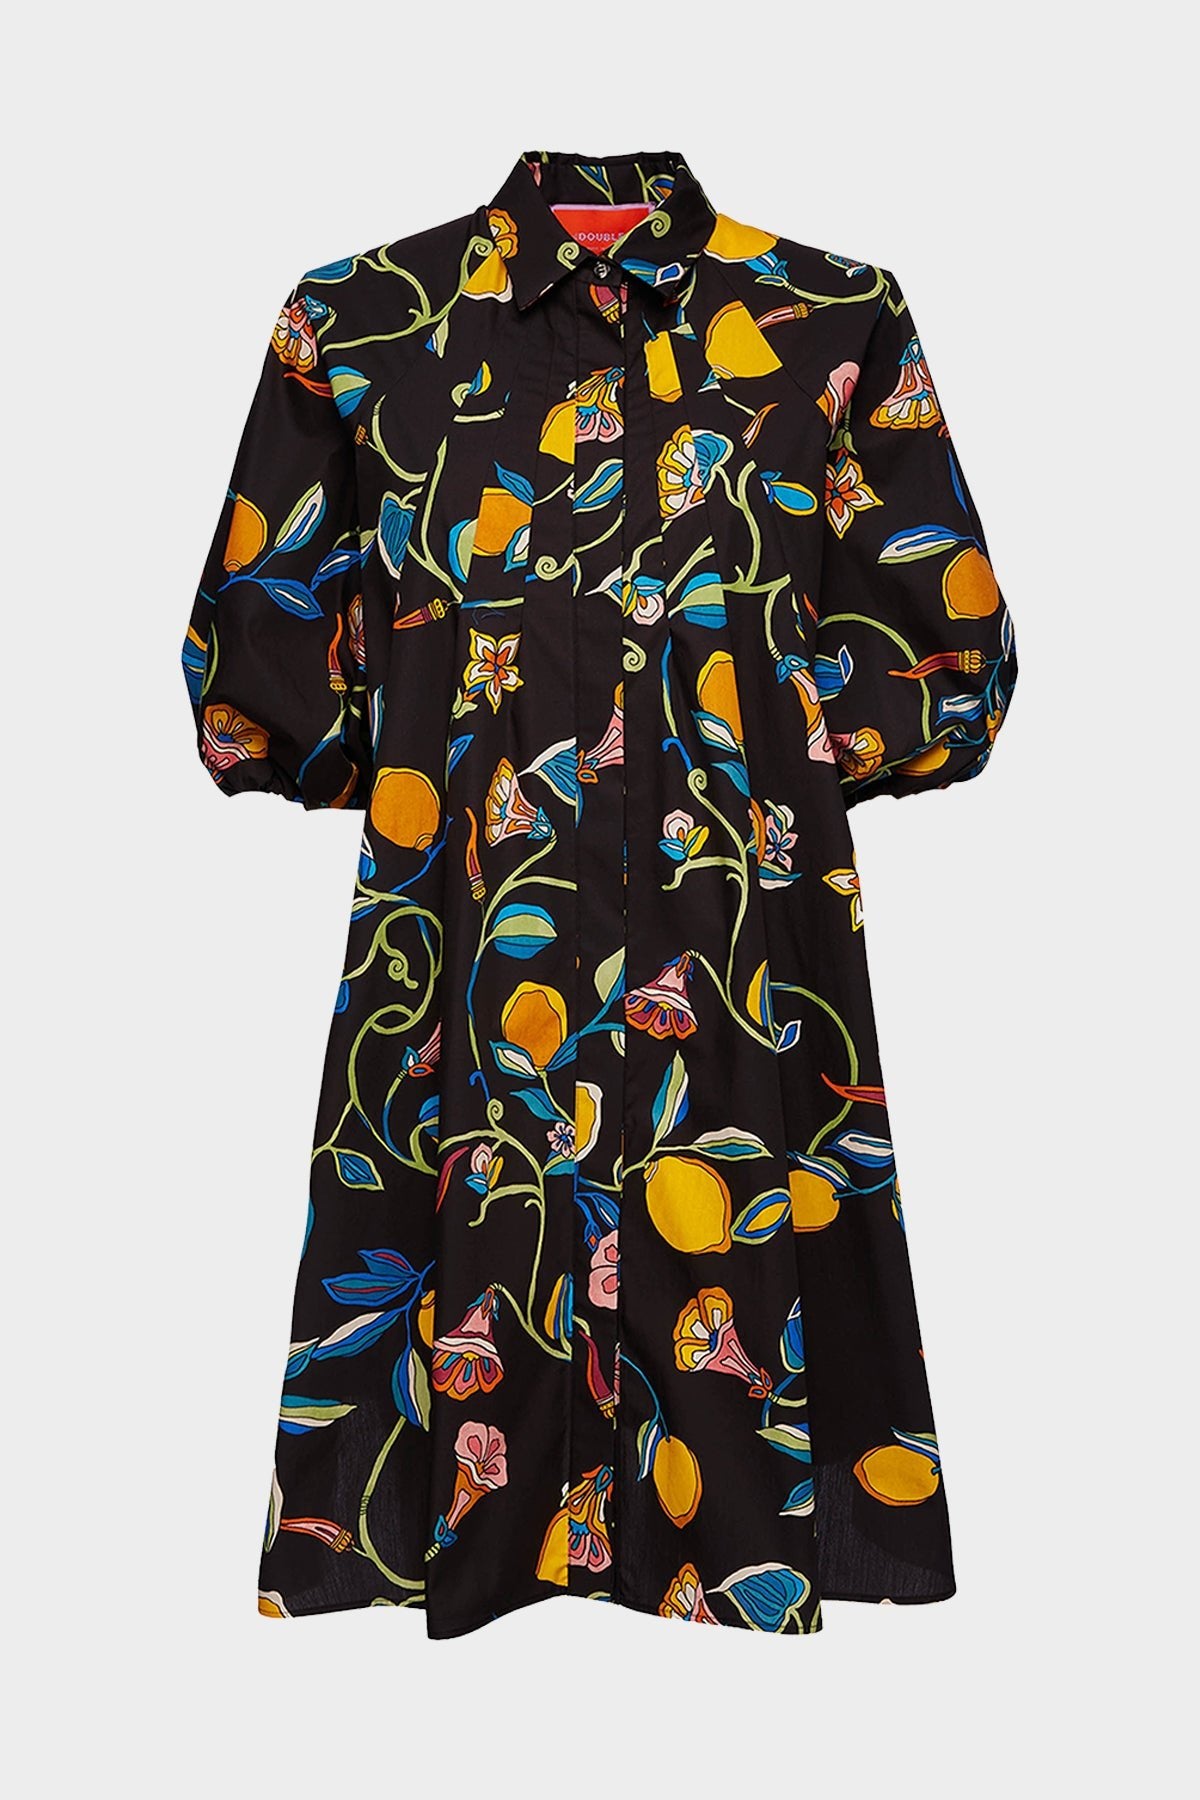 Sunburst Dress in Borboni - shop-olivia.com